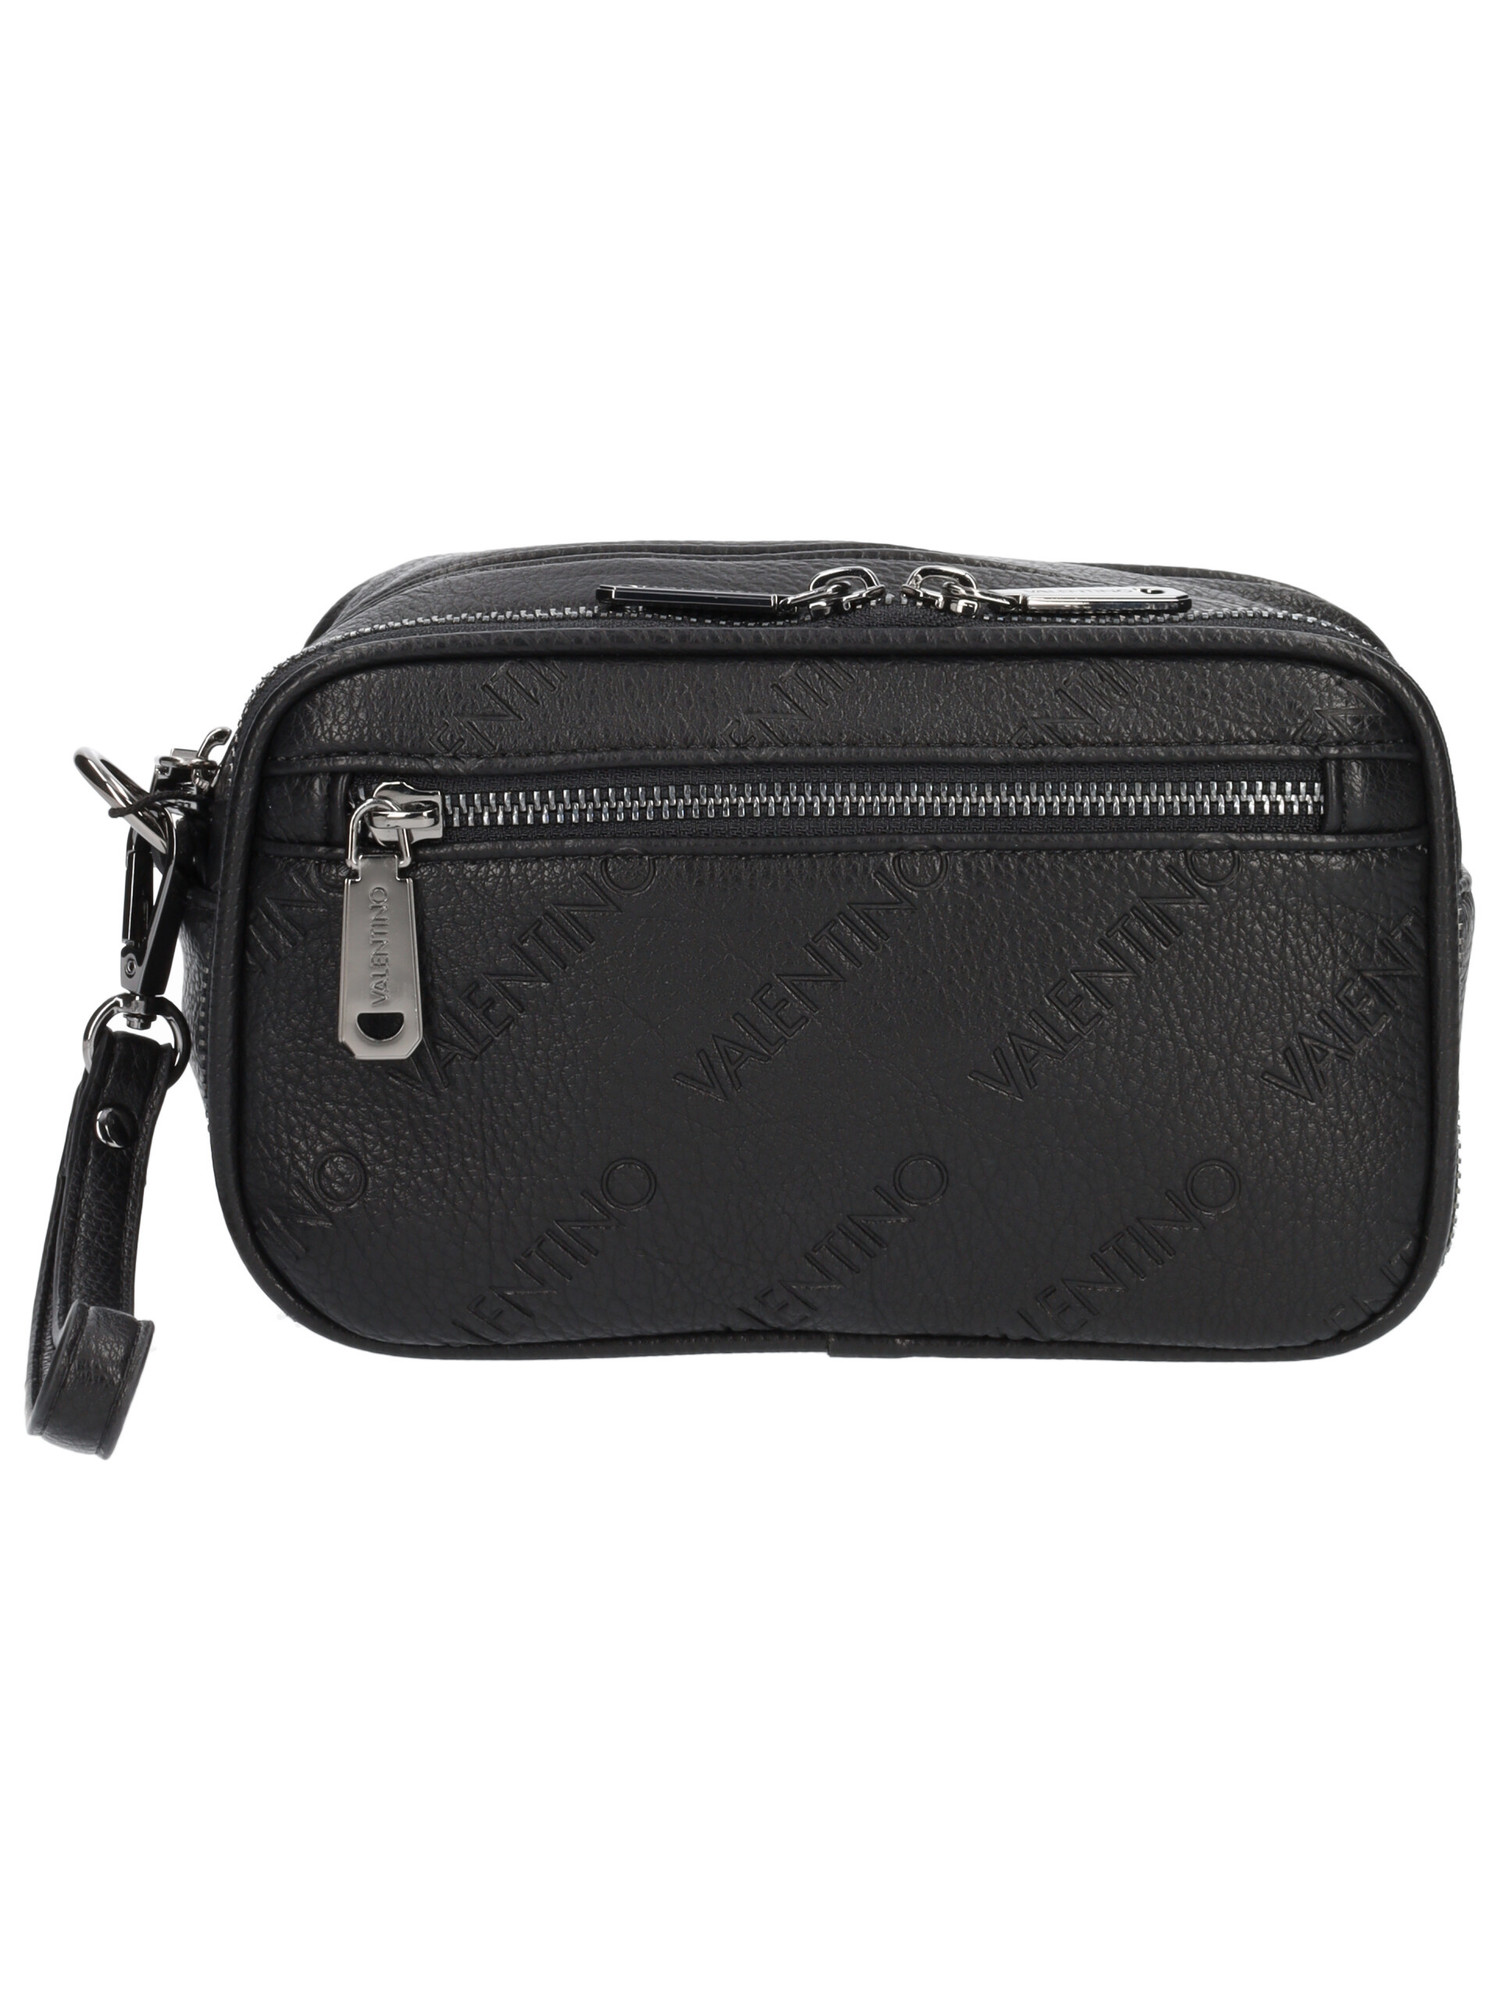 Mario Valentino Shoulder bag pochette black black leather logo